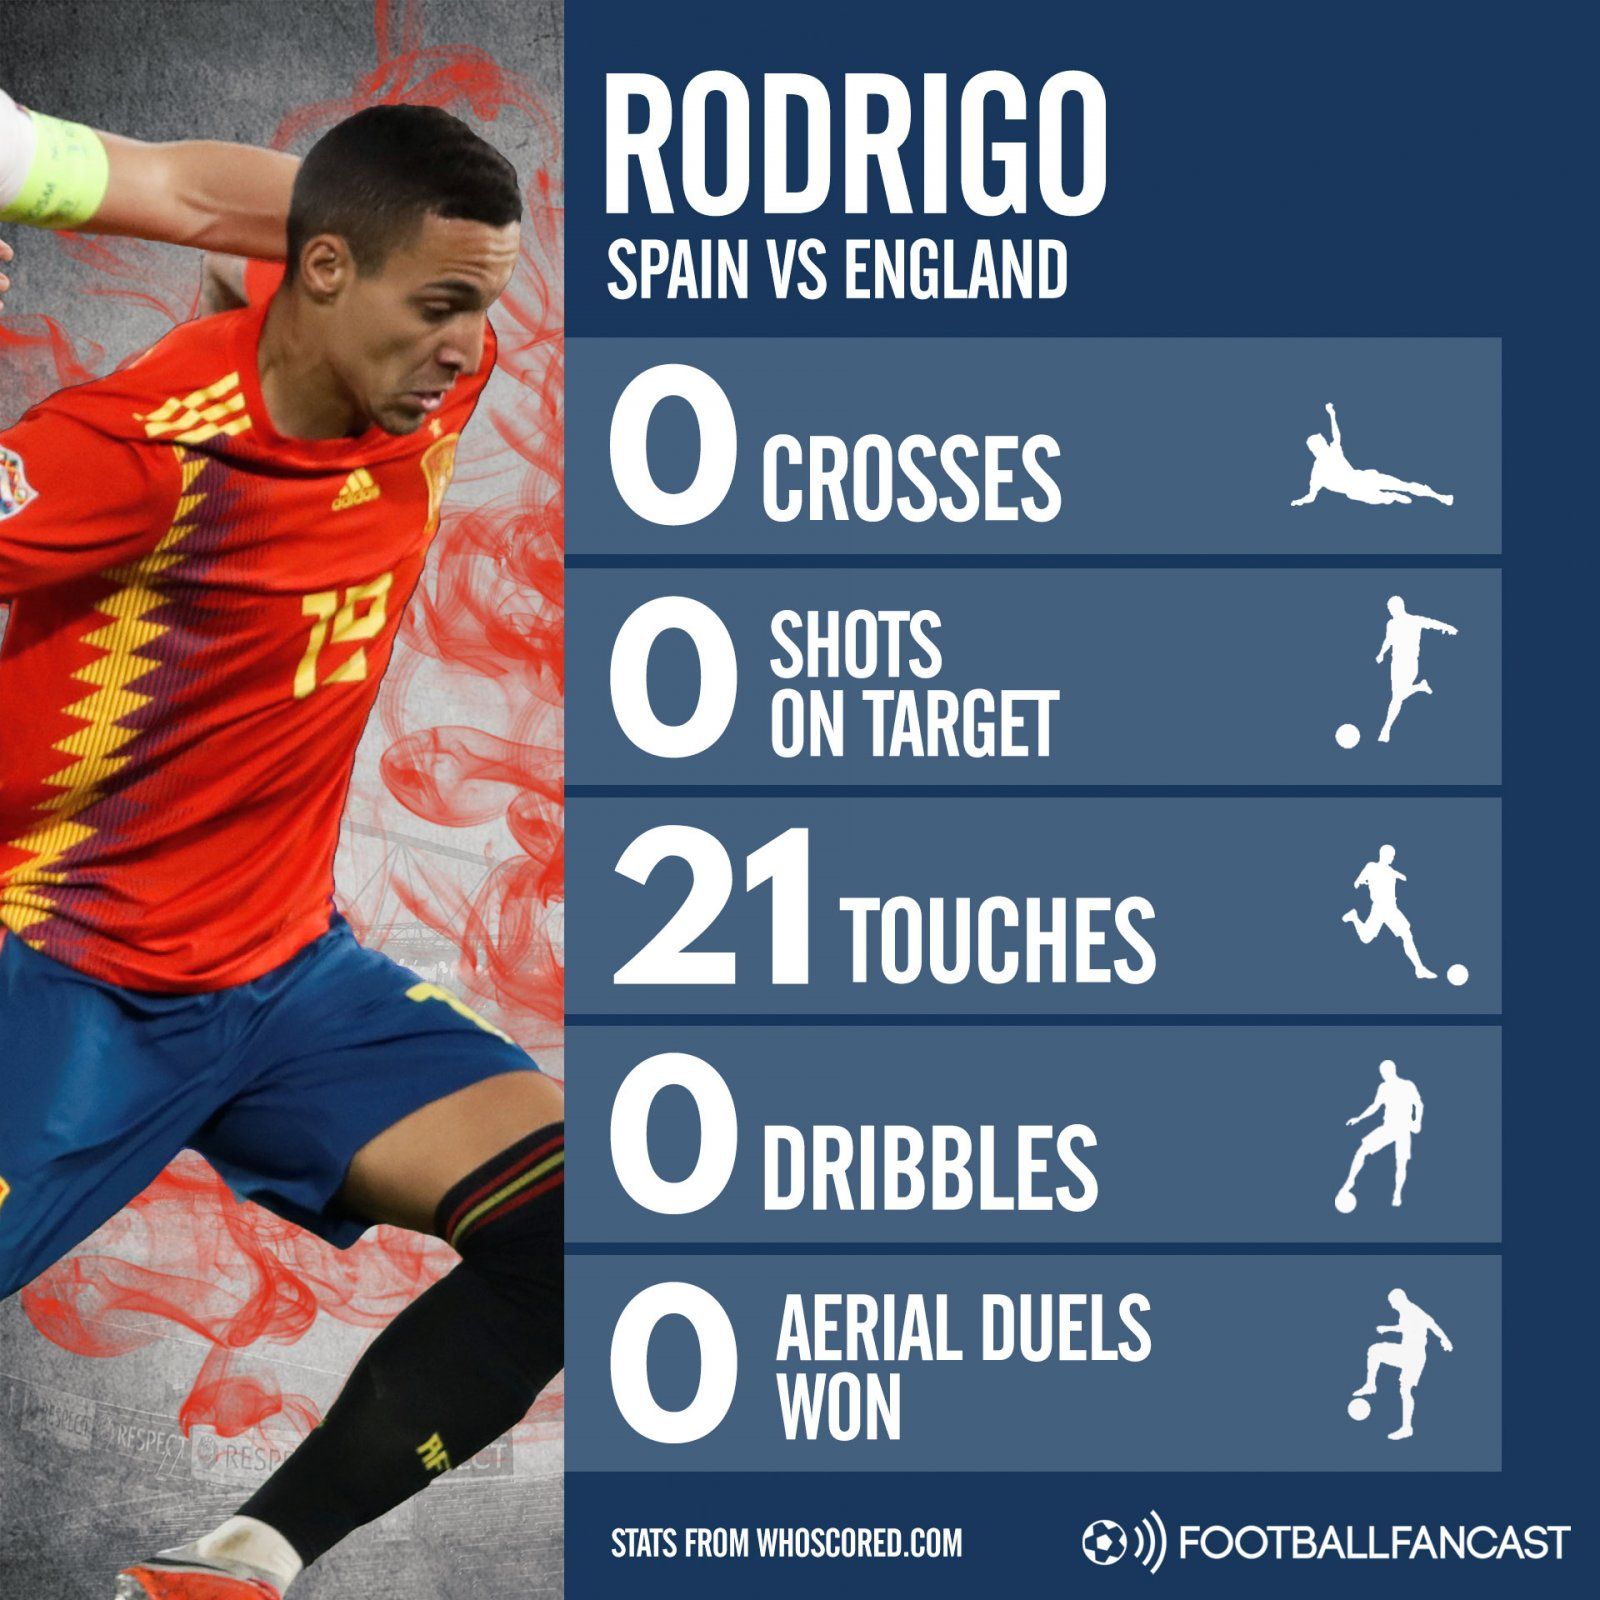 Spain striker Rodrigo's stats in 3-2 defeat to England